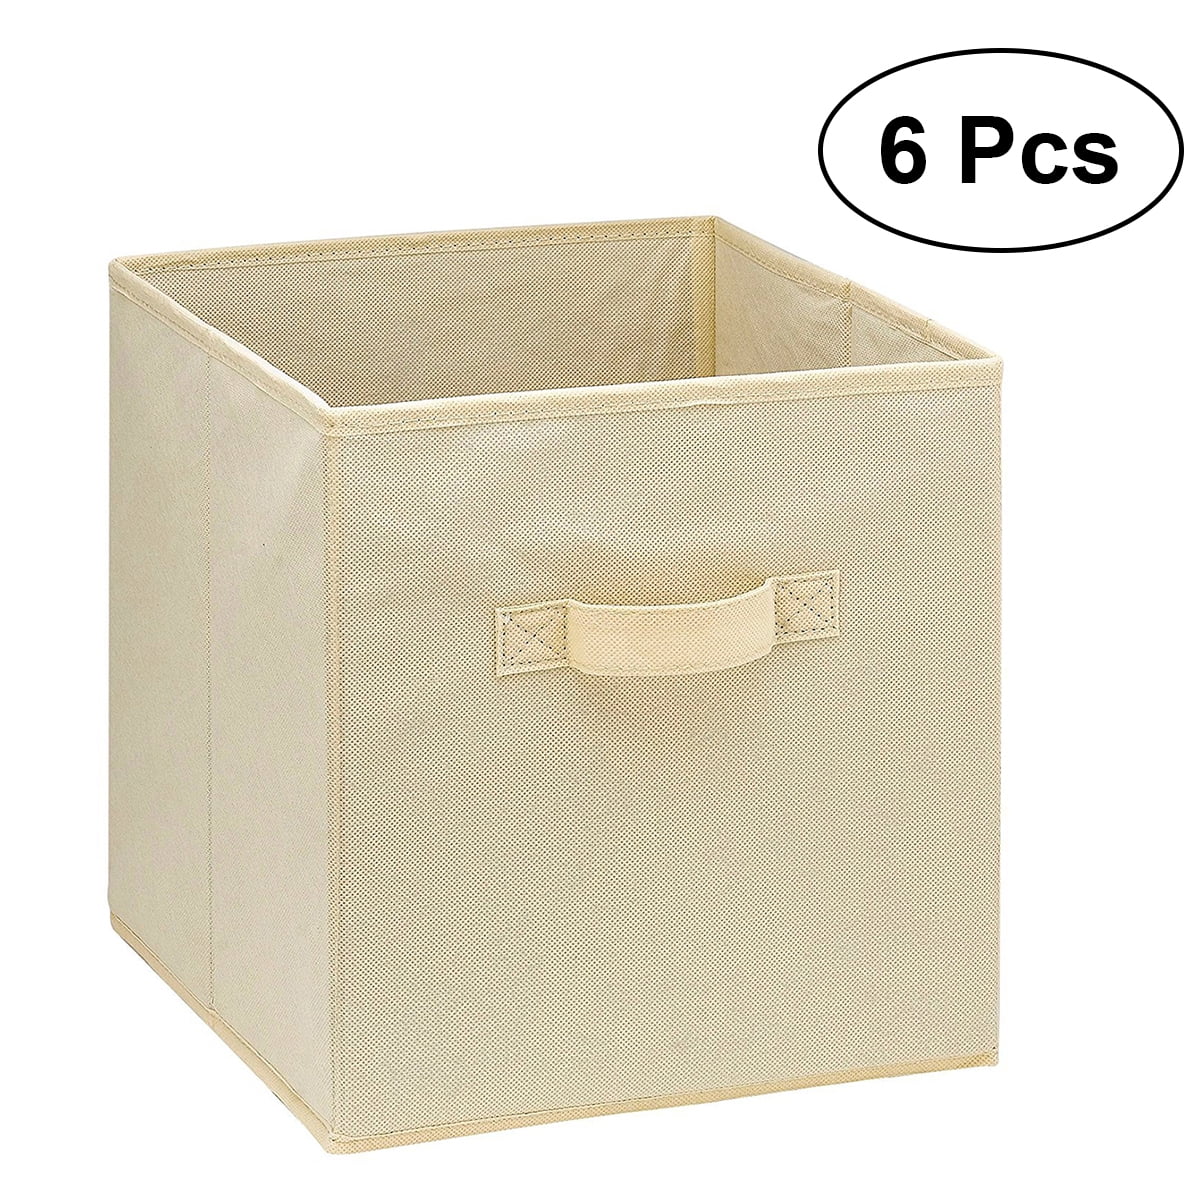 6Packs Closet Storage Box Organizer Cube Bin Basket Container Store Clothes Book